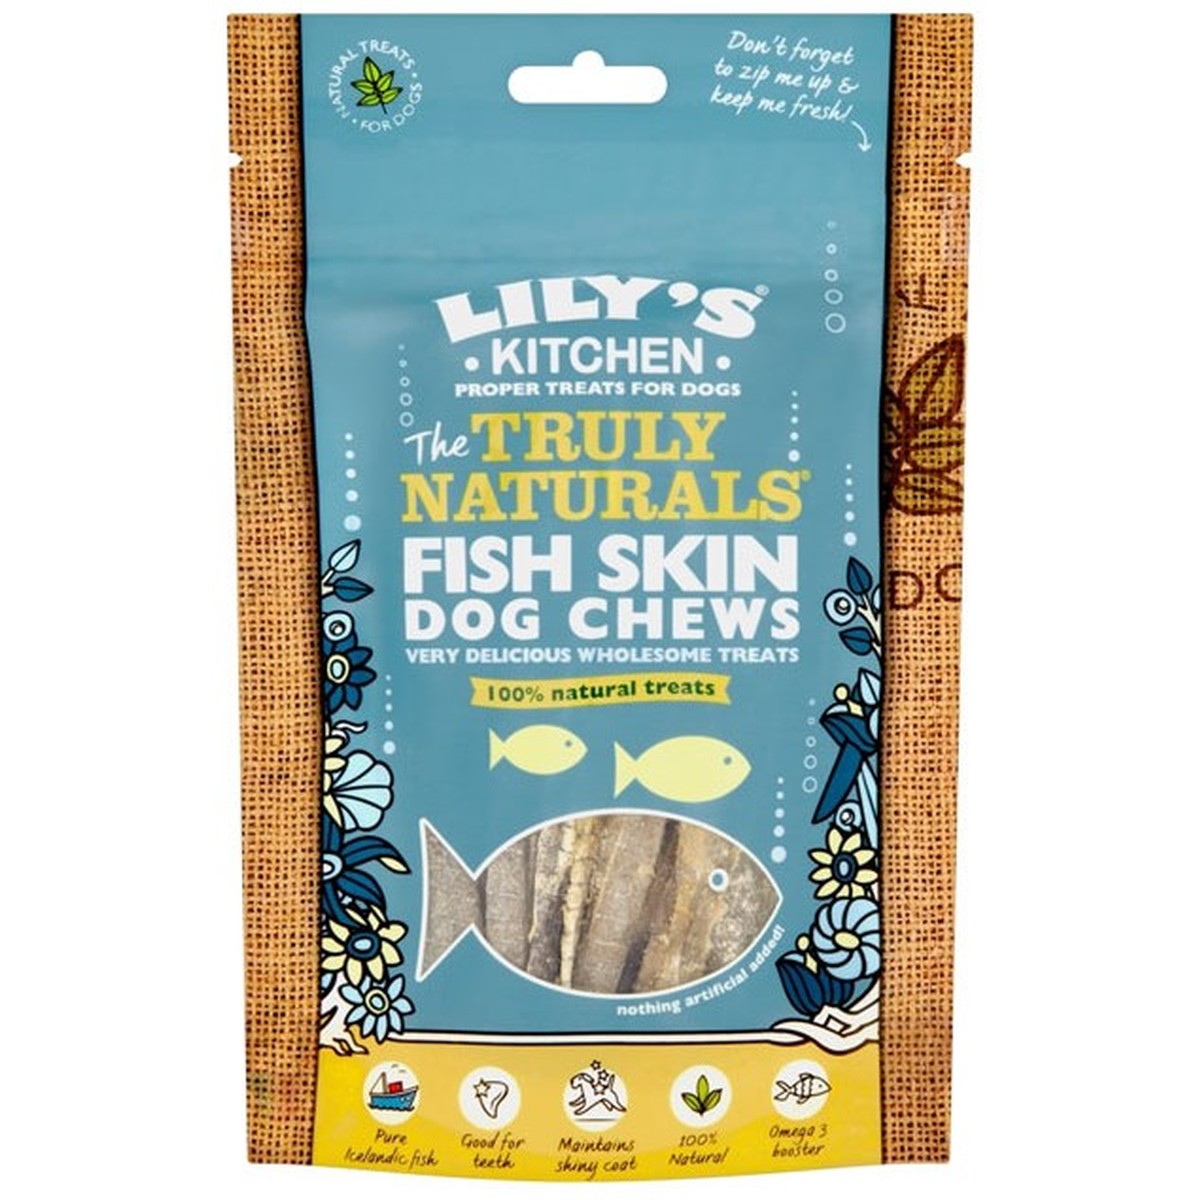   Lily's Kitchen dog truly naturals fish skin dog chew 75g  75g